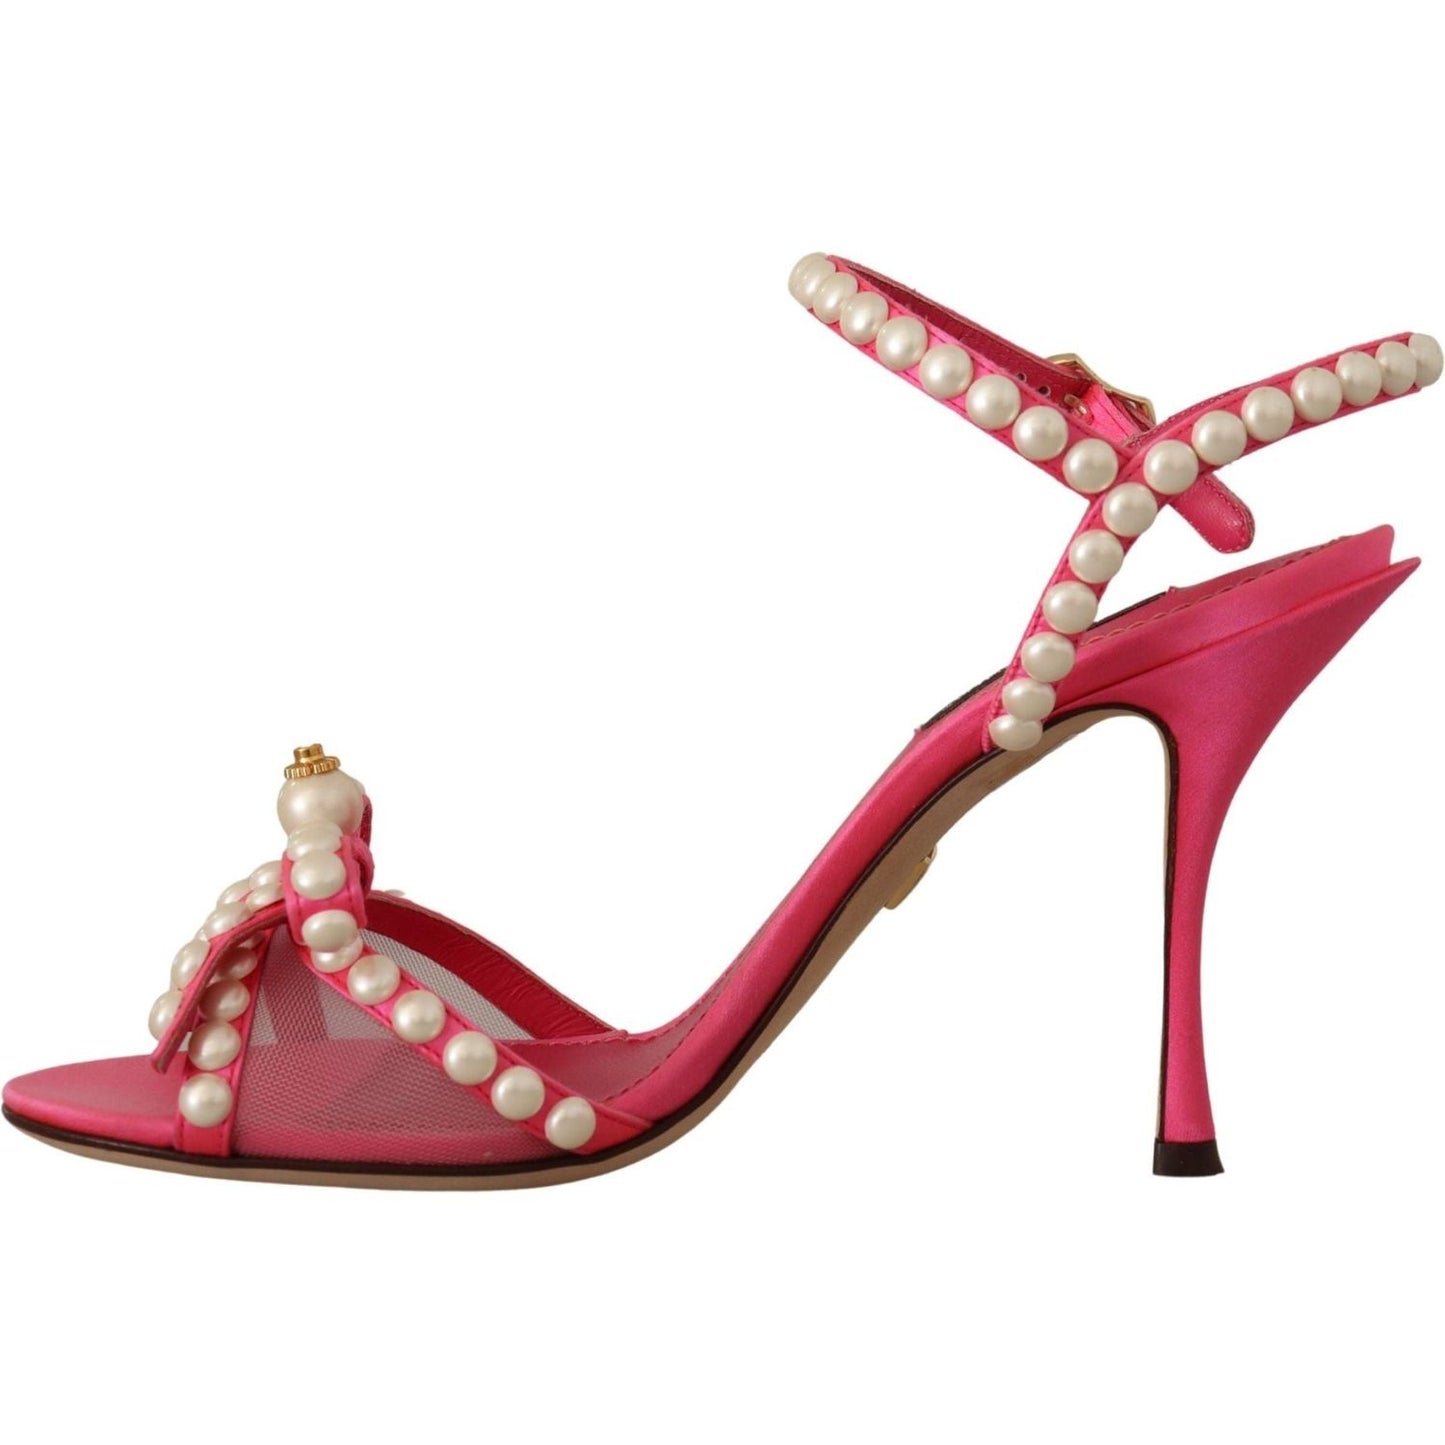 Dolce & Gabbana Elegant Pink Pearl Embellished Heels Sandals pink-satin-white-pearl-crystals-heels-shoes IMG_0410-scaled-5f72ed72-e11.jpg